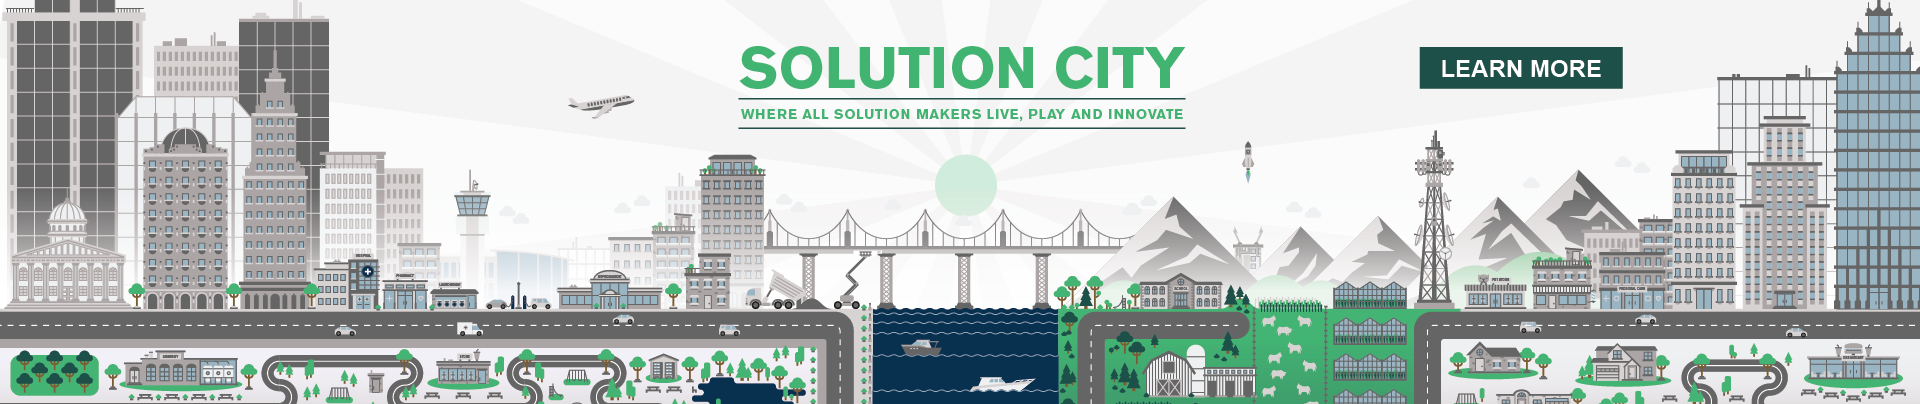 solution city